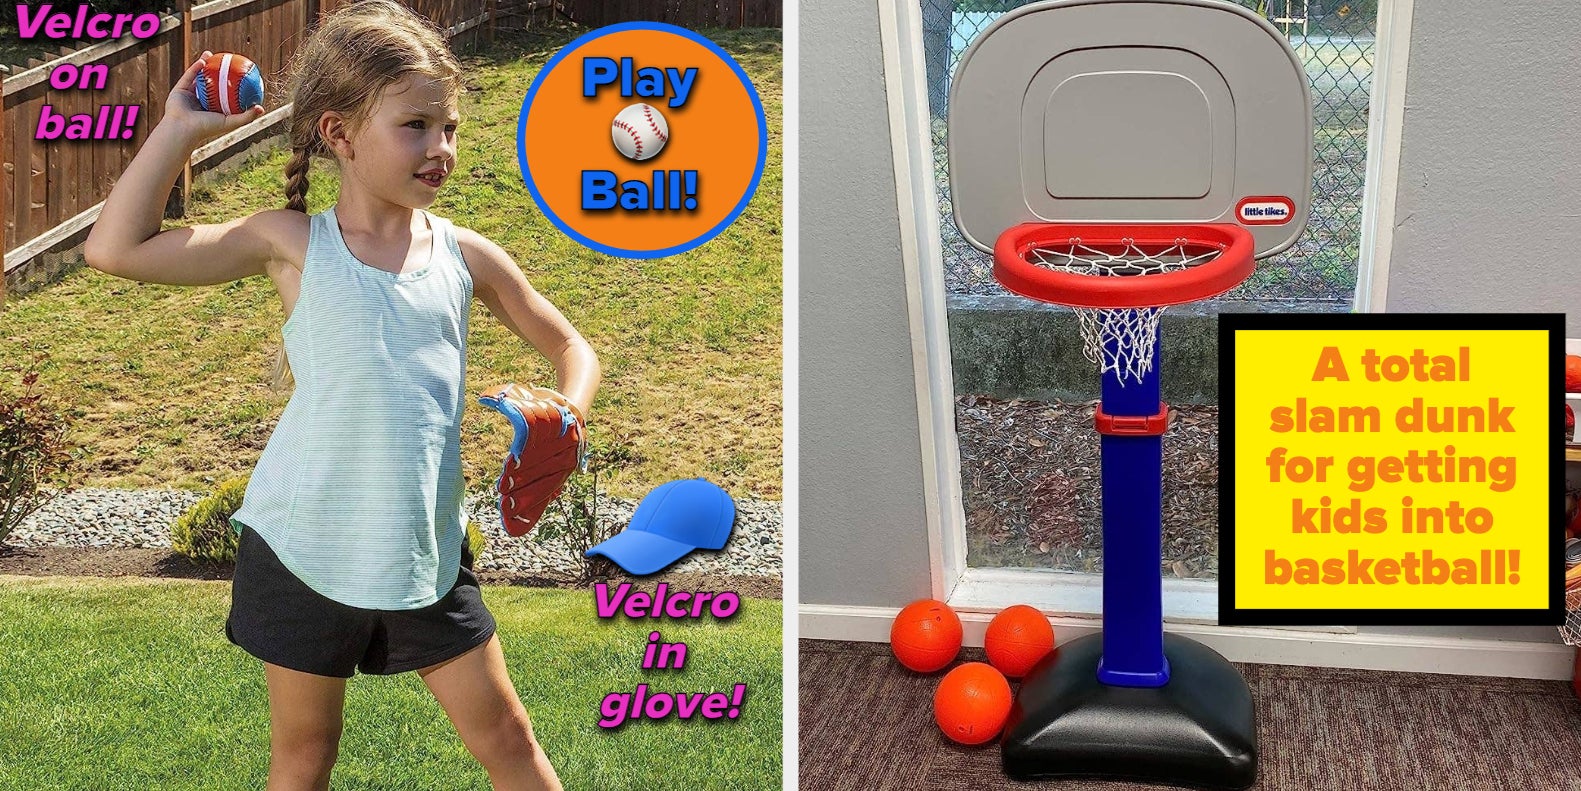 24 Hydro Lacrosse Sticks w/ball - Fun Stuff Toys